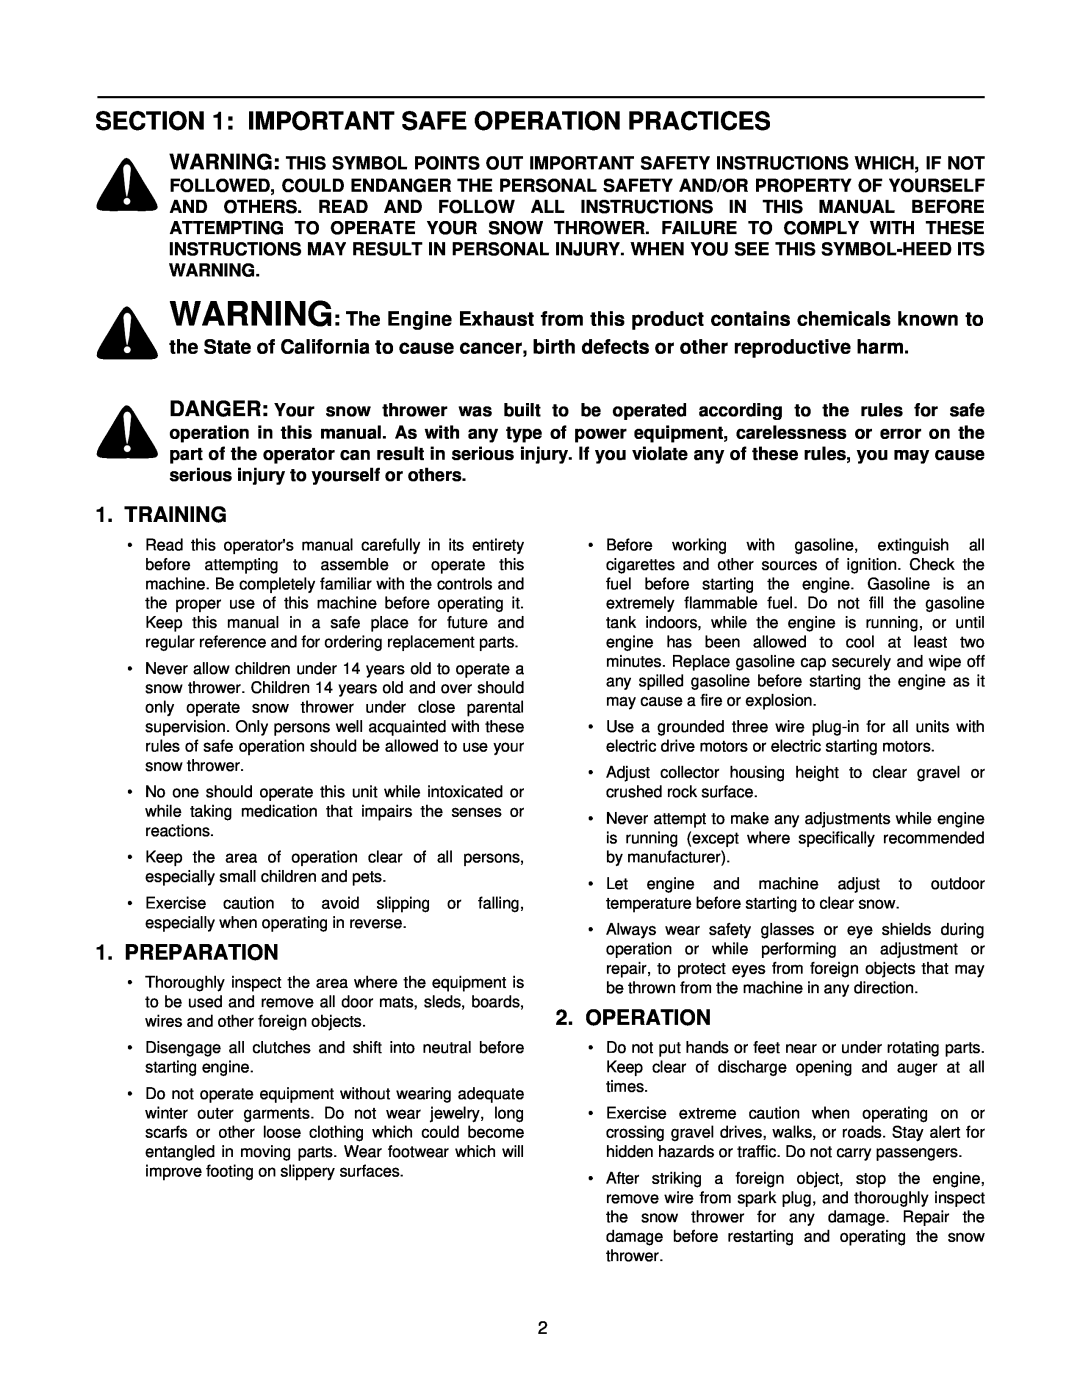 MTD Series 140 thru 152 manual Important Safe Operation Practices, Training, Preparation 